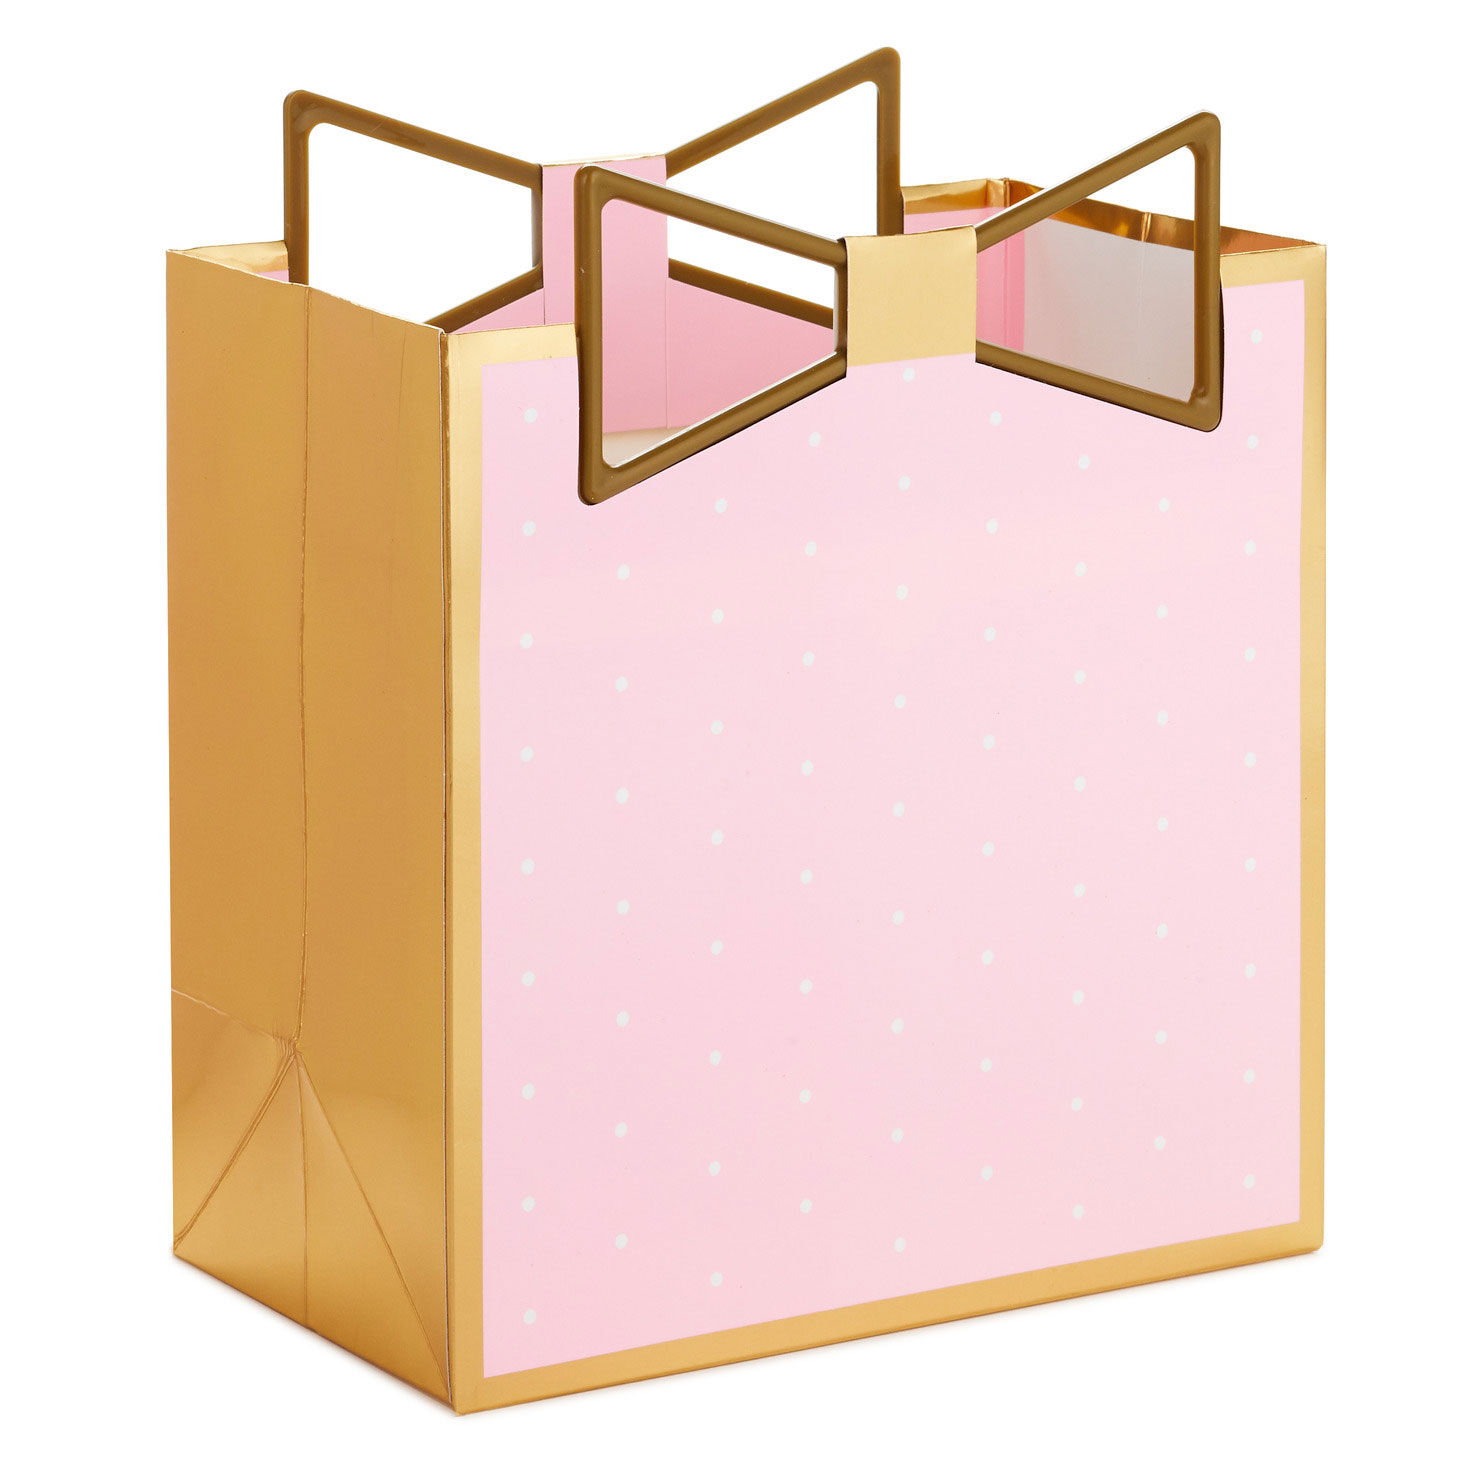 Pink and Orange Pom-Pom Gift Bow, 5.5 - Bows & Ribbons - Hallmark